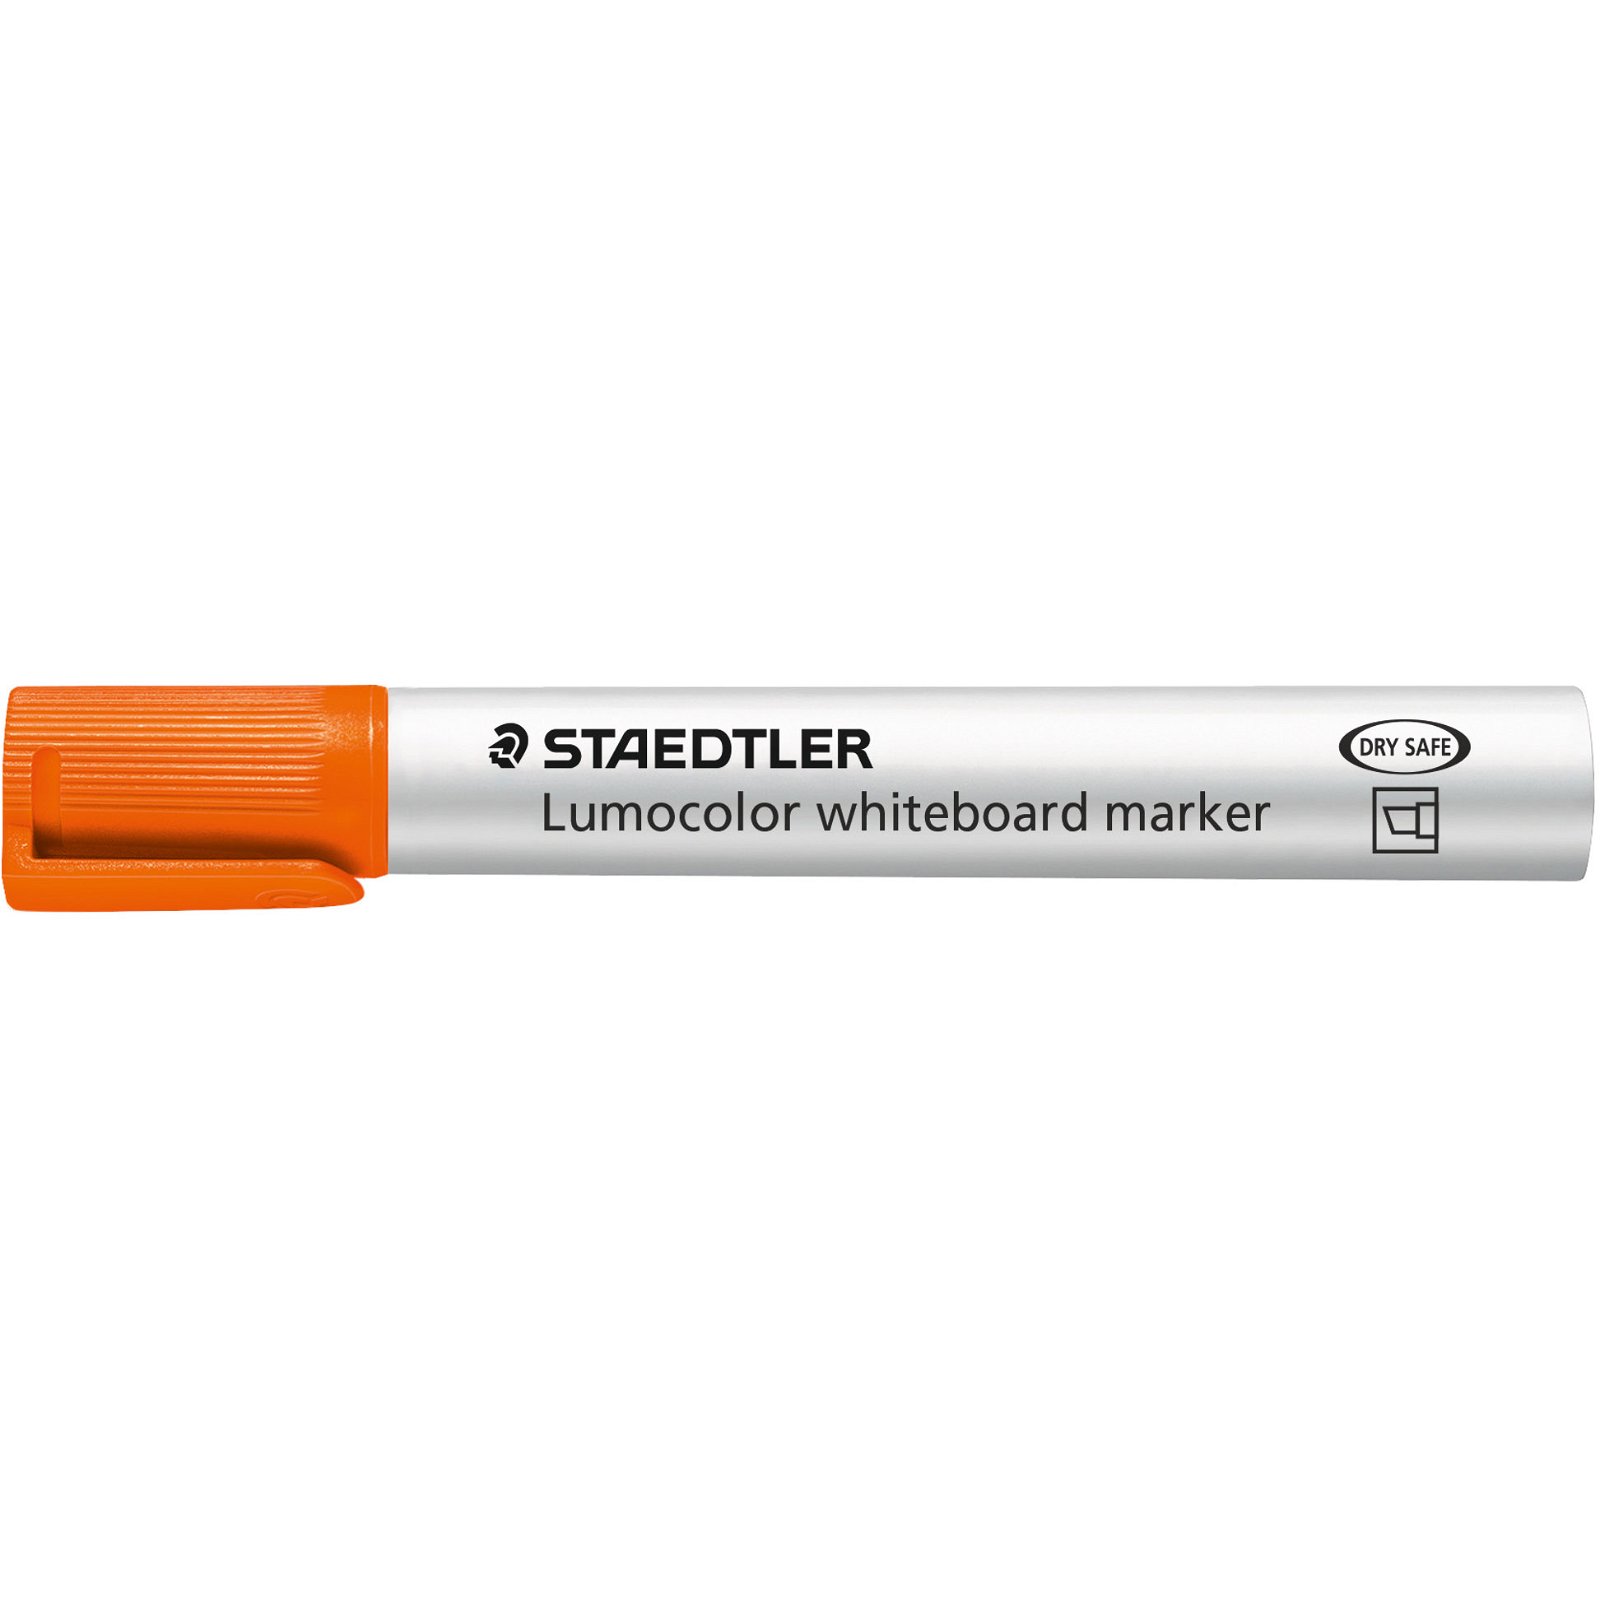 STAEDTLER Lumocolor 351 whiteboardmarker orange